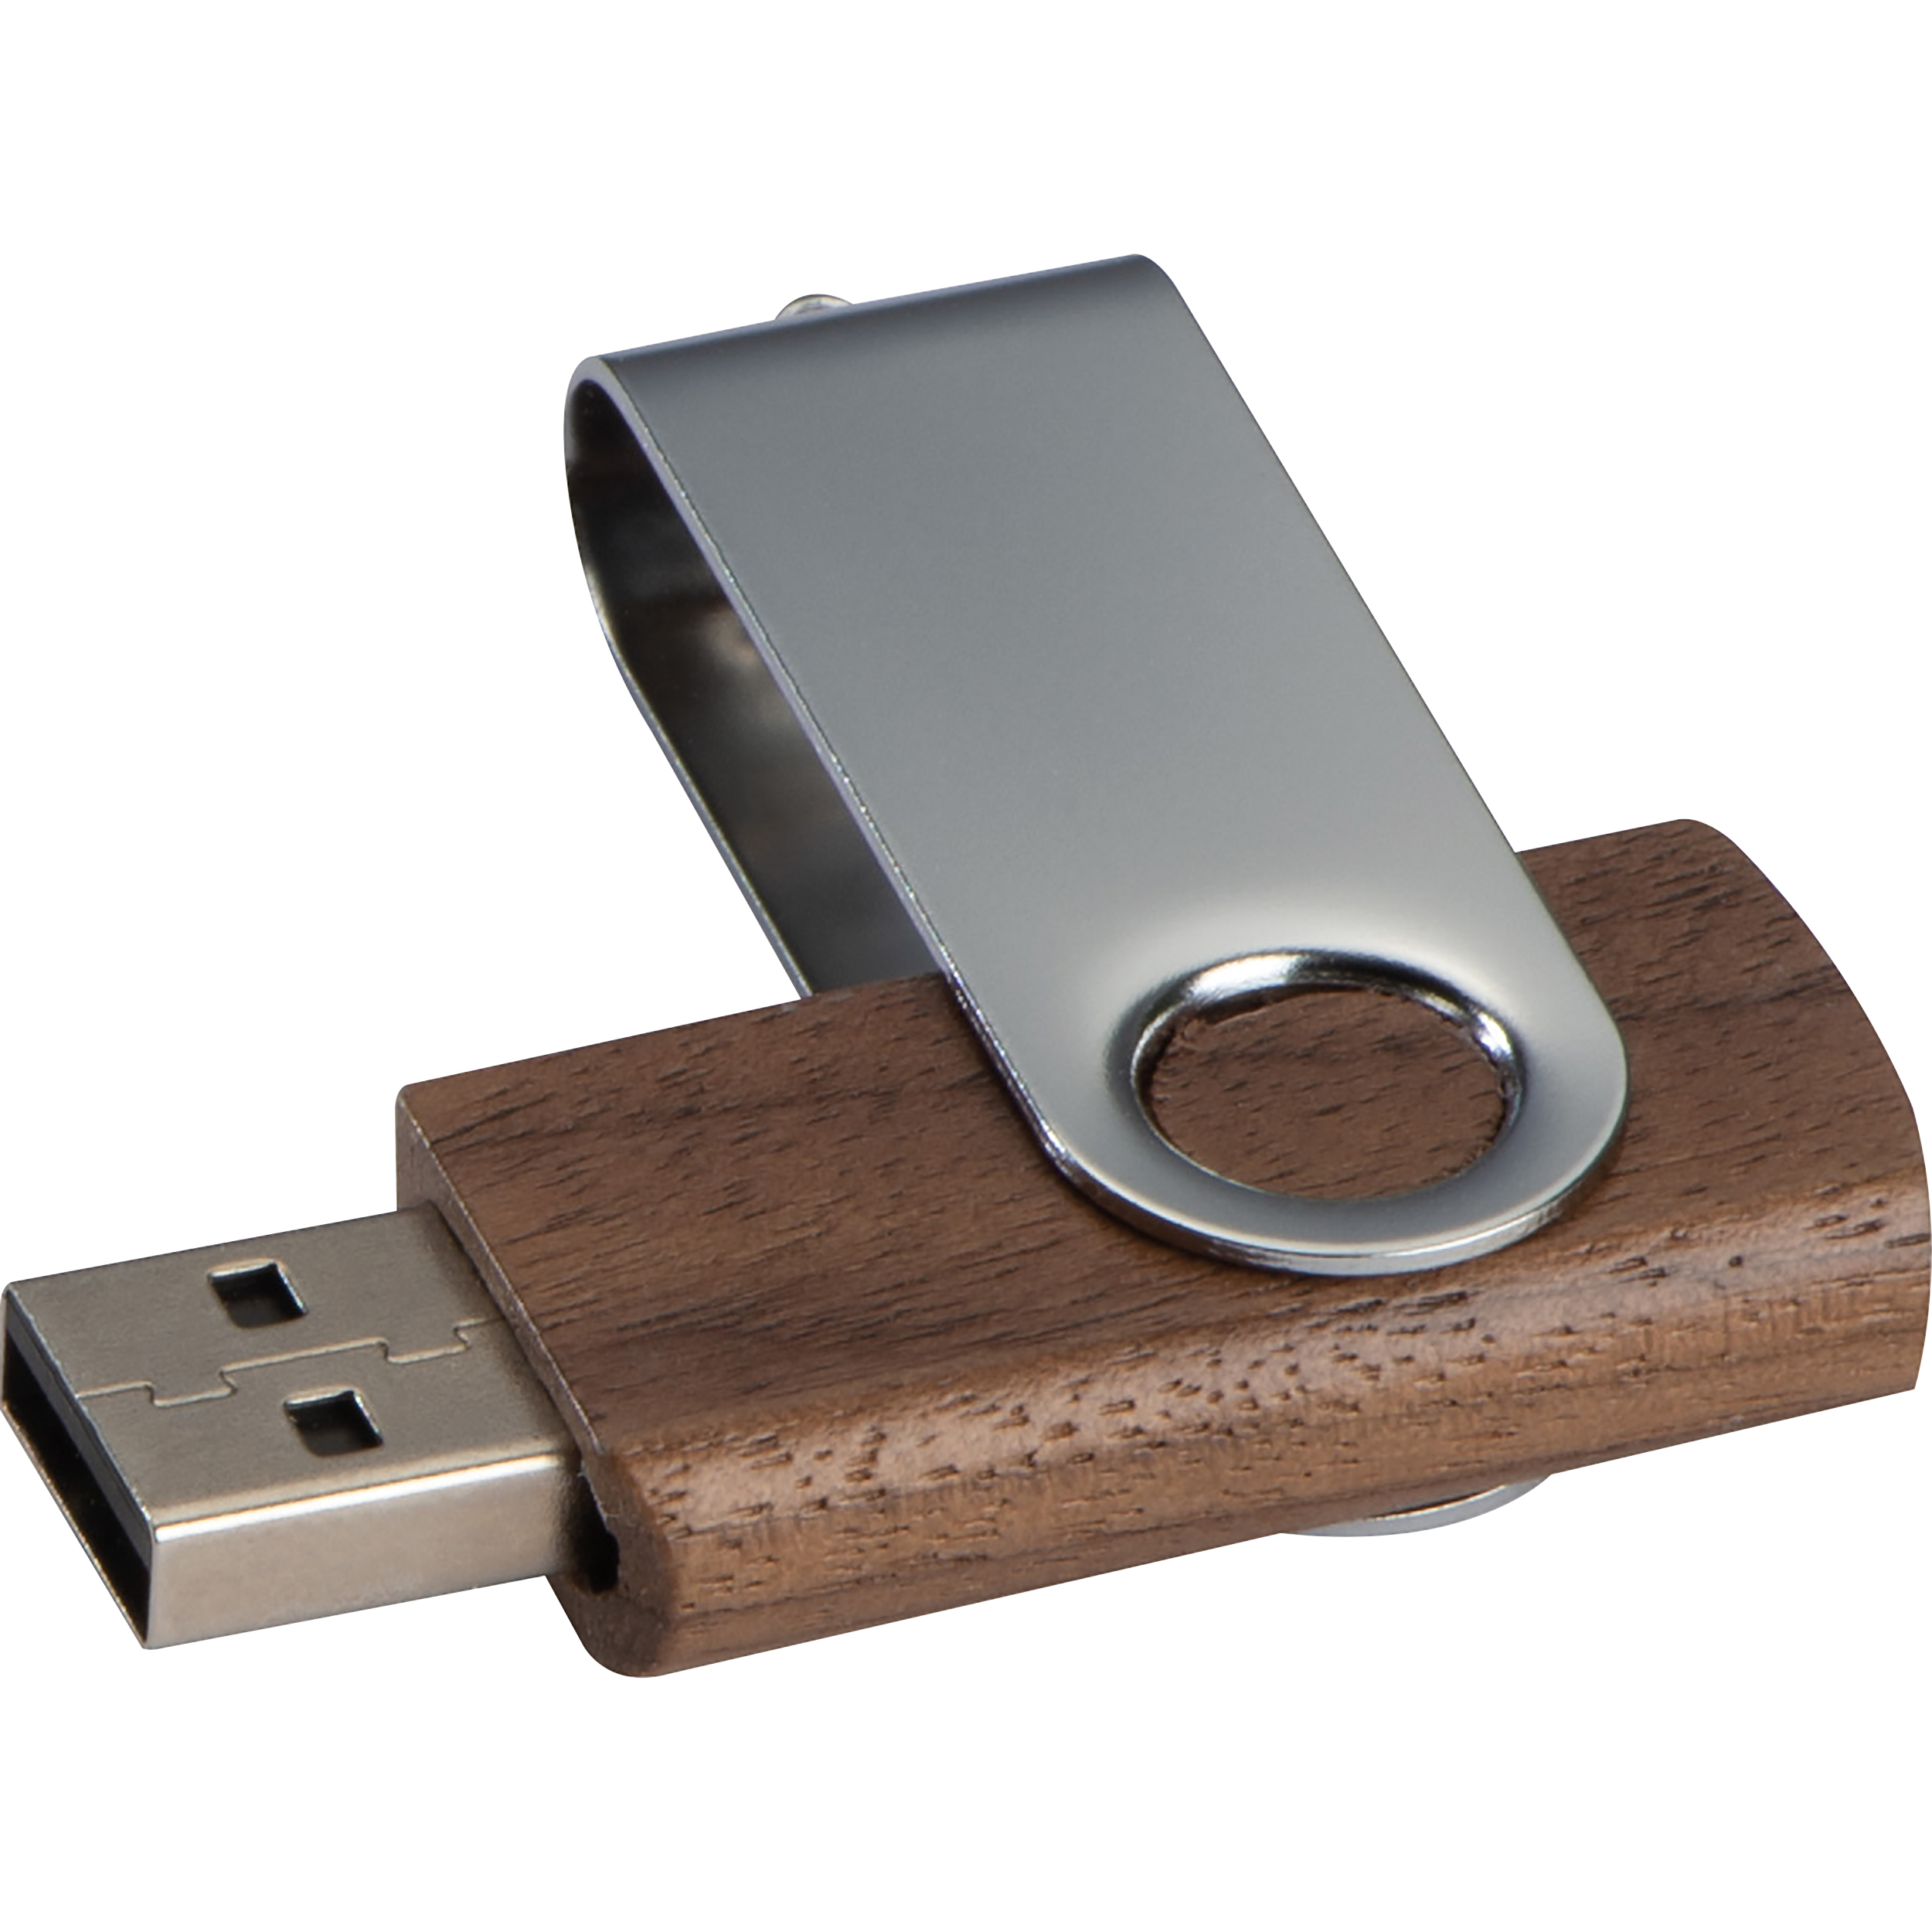 USB en noyer - Zaprinta Belgique